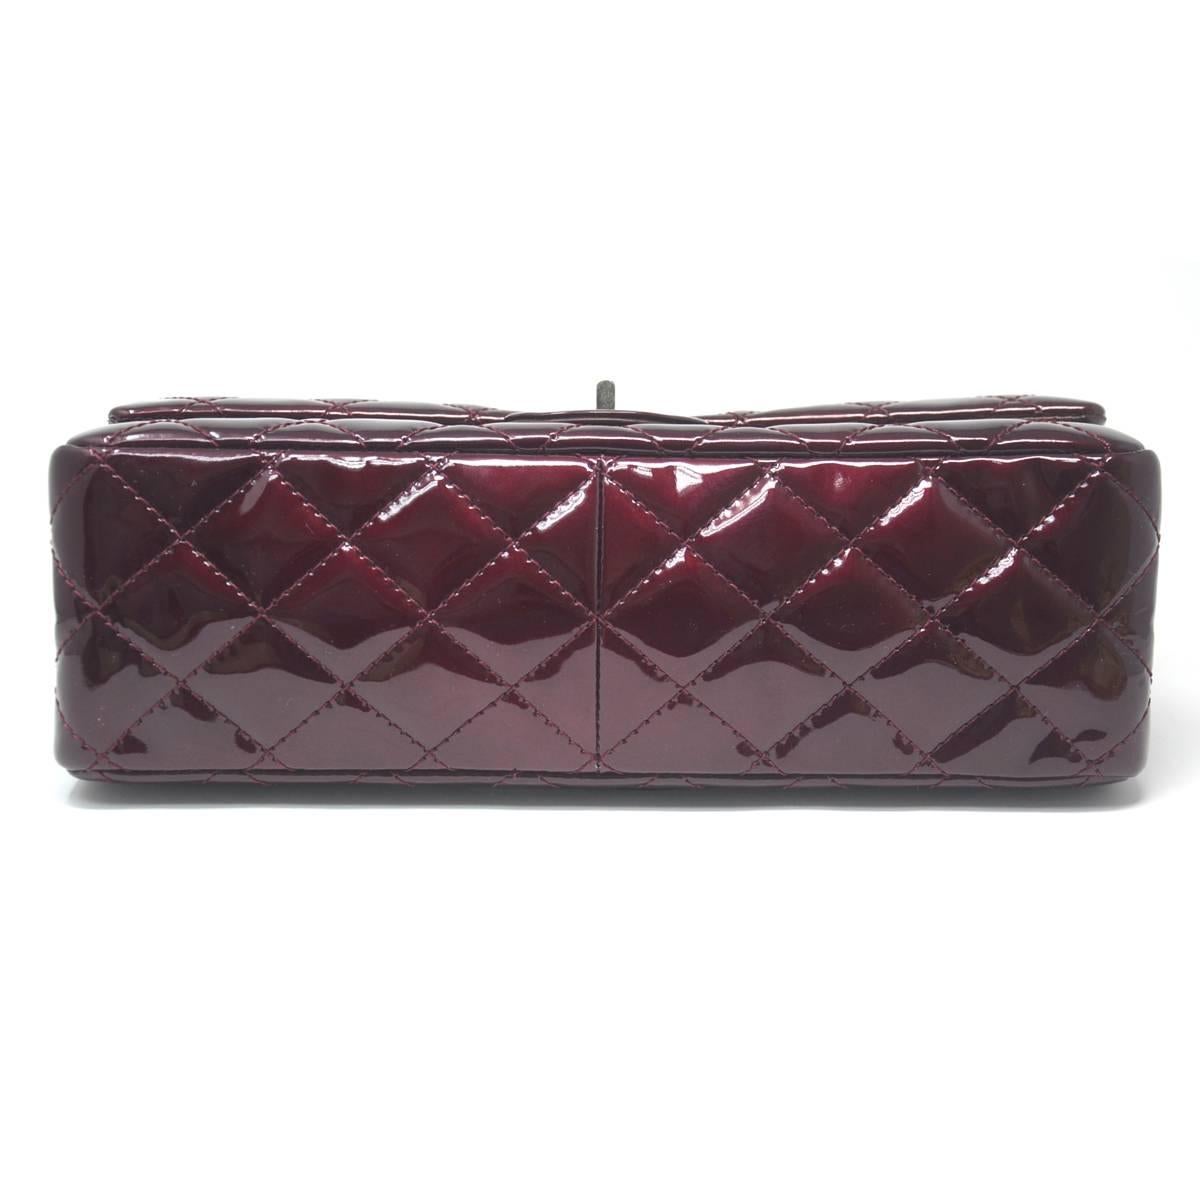 Black Chanel Burgundy Reissue Patent Leather 2.55 Classic Handbag